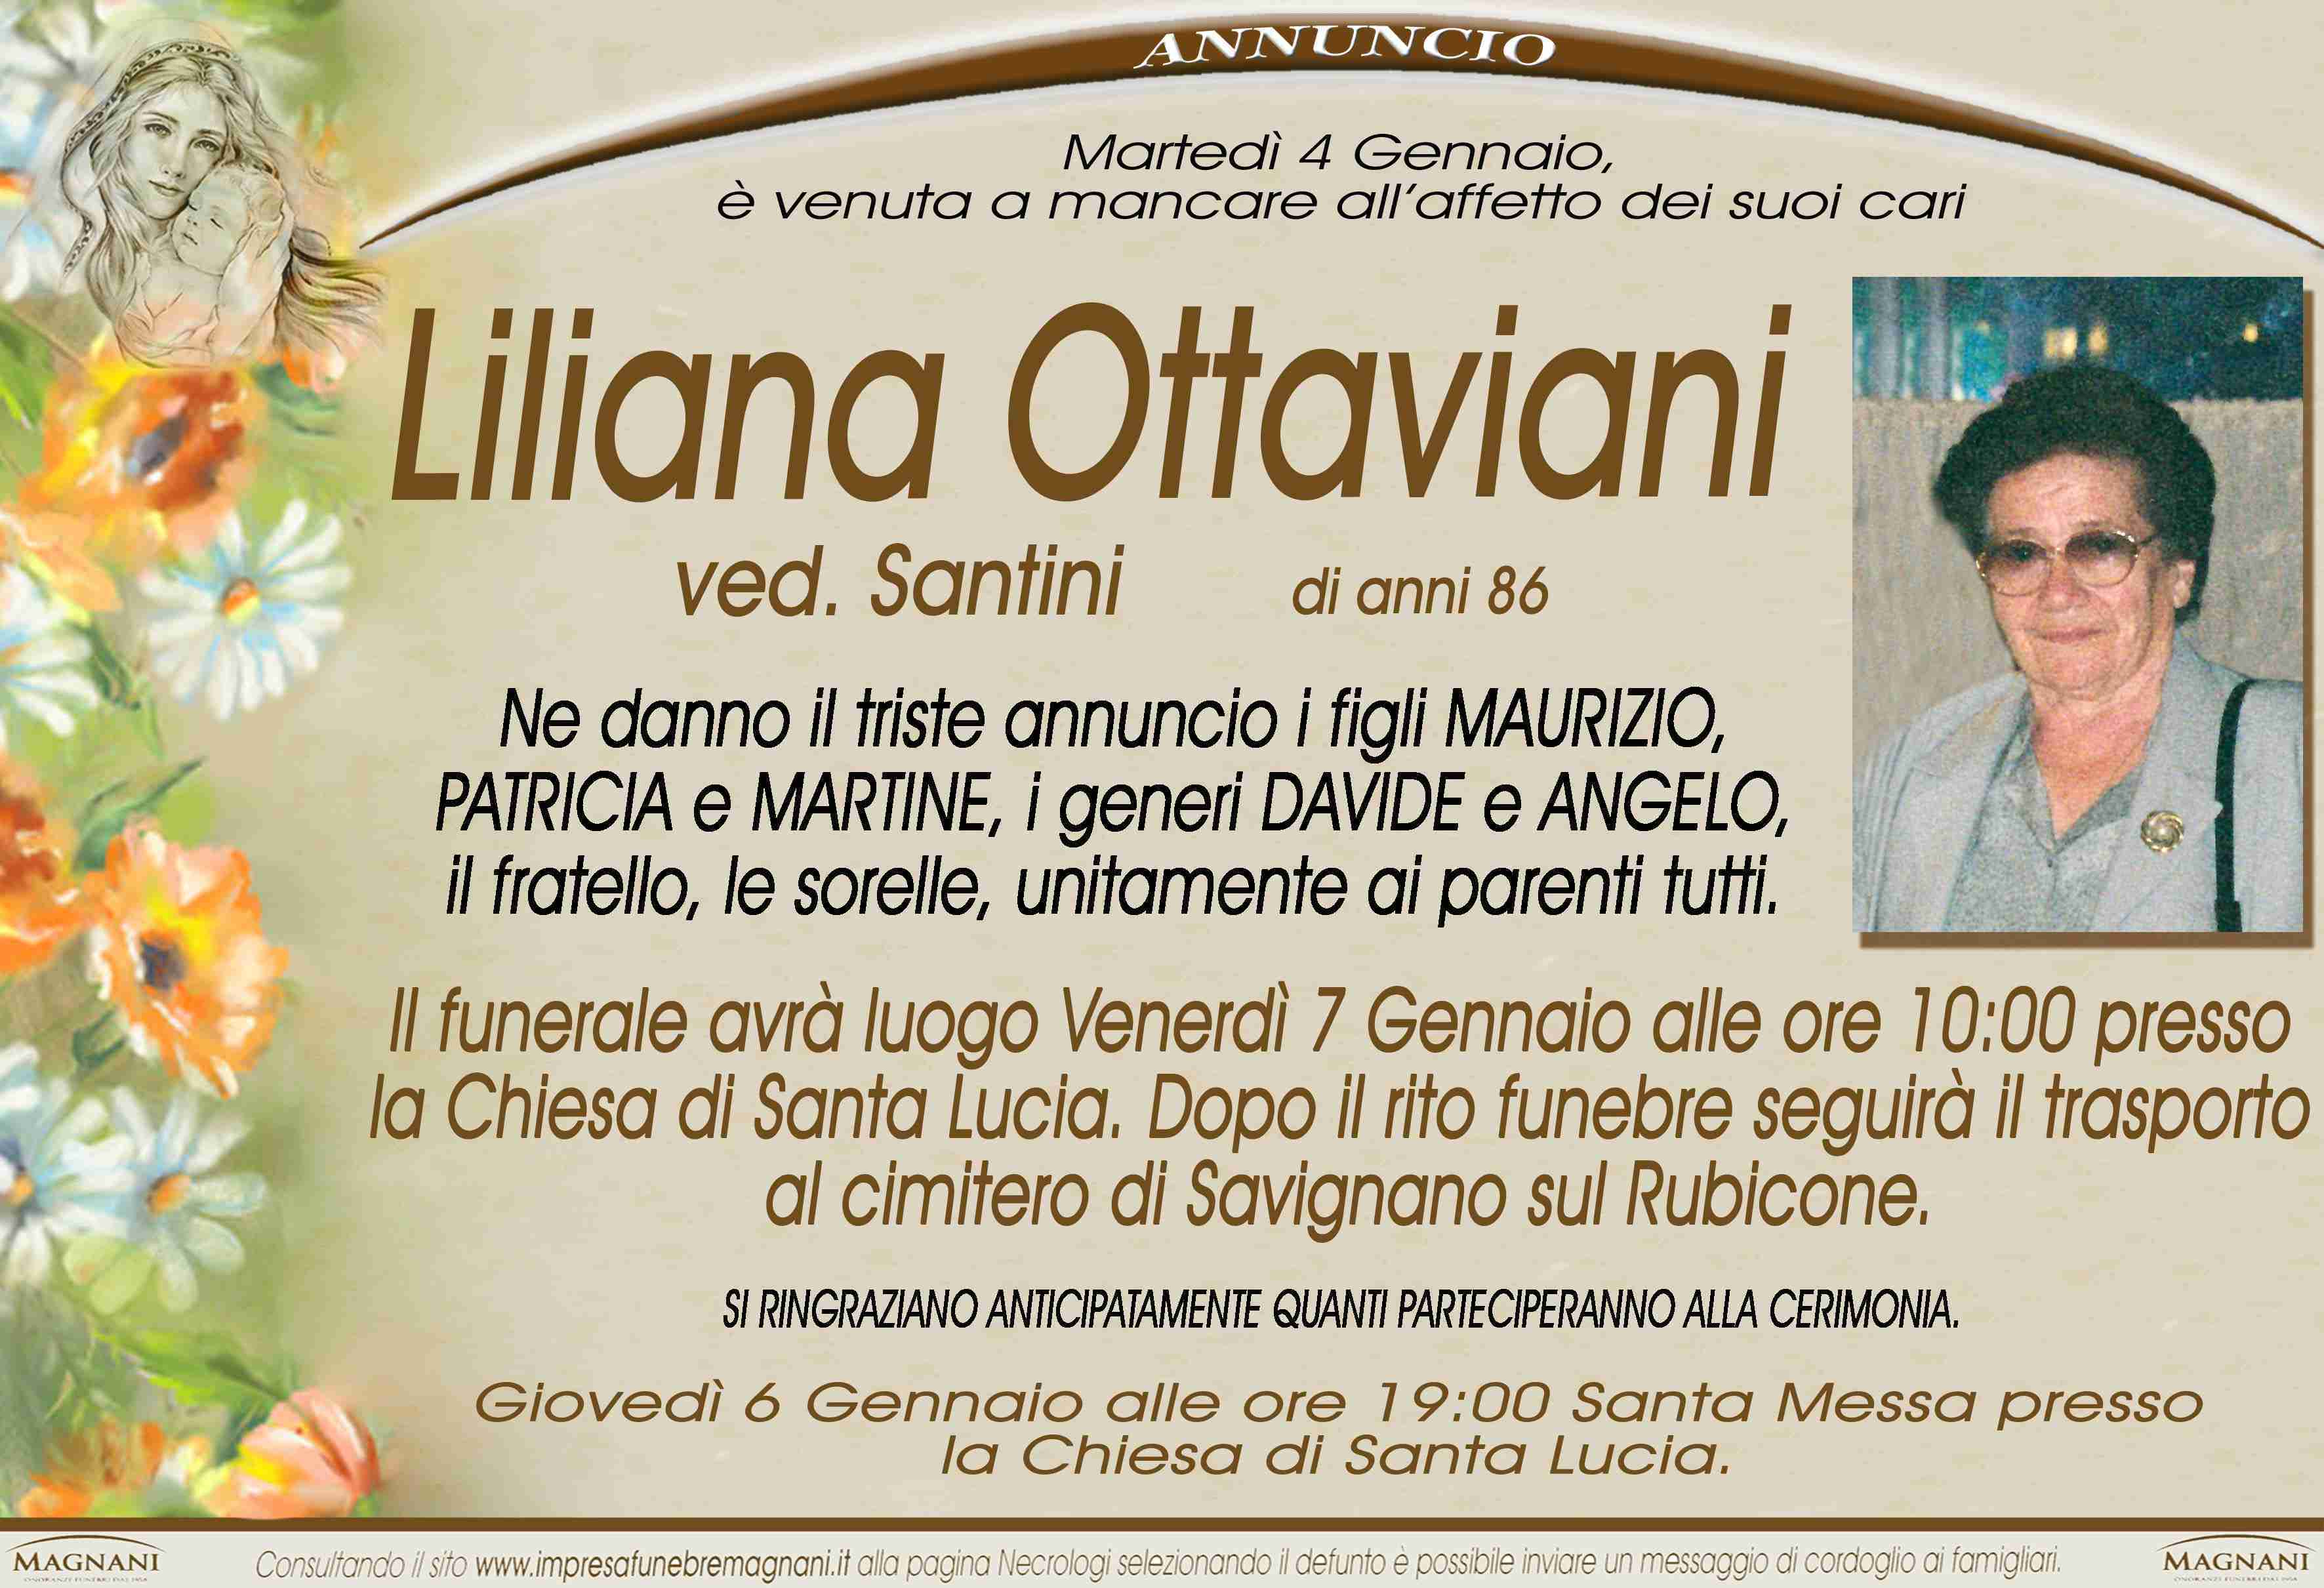 Liliana Ottaviani